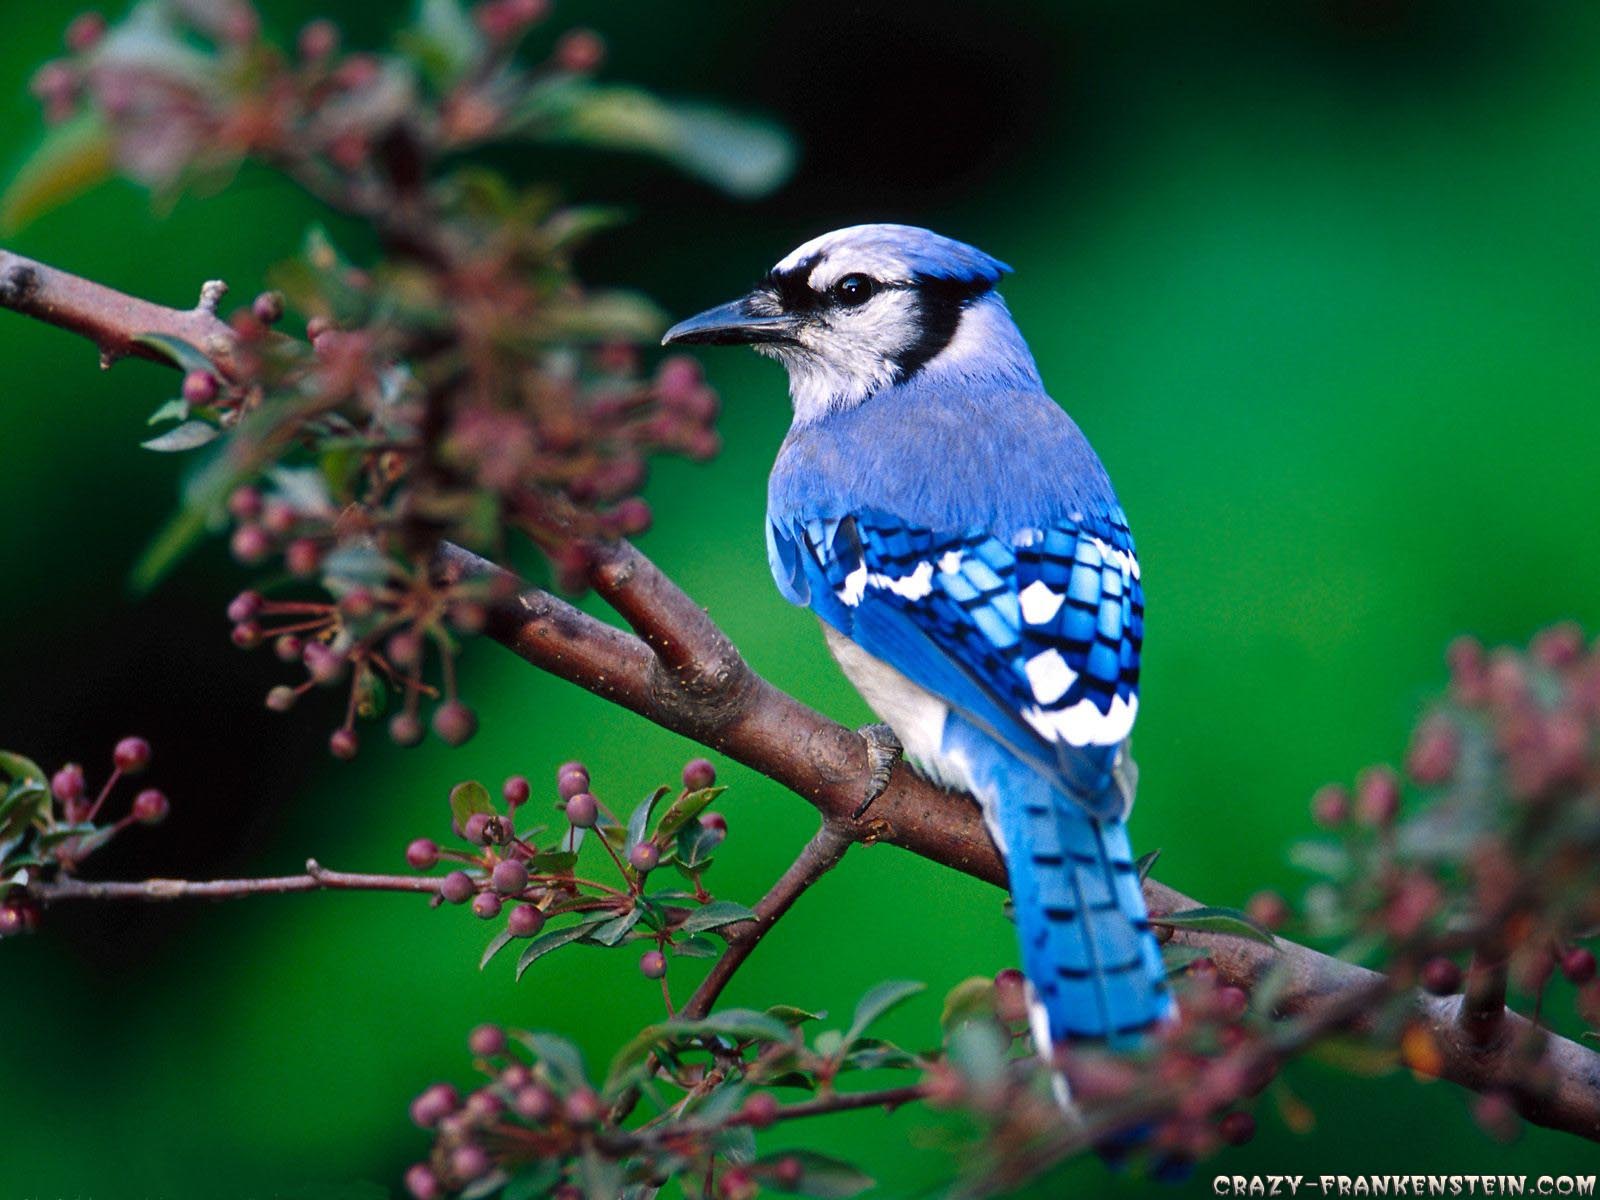 Amazing Desktop Wallpaper Collection Of Beautiful Birds